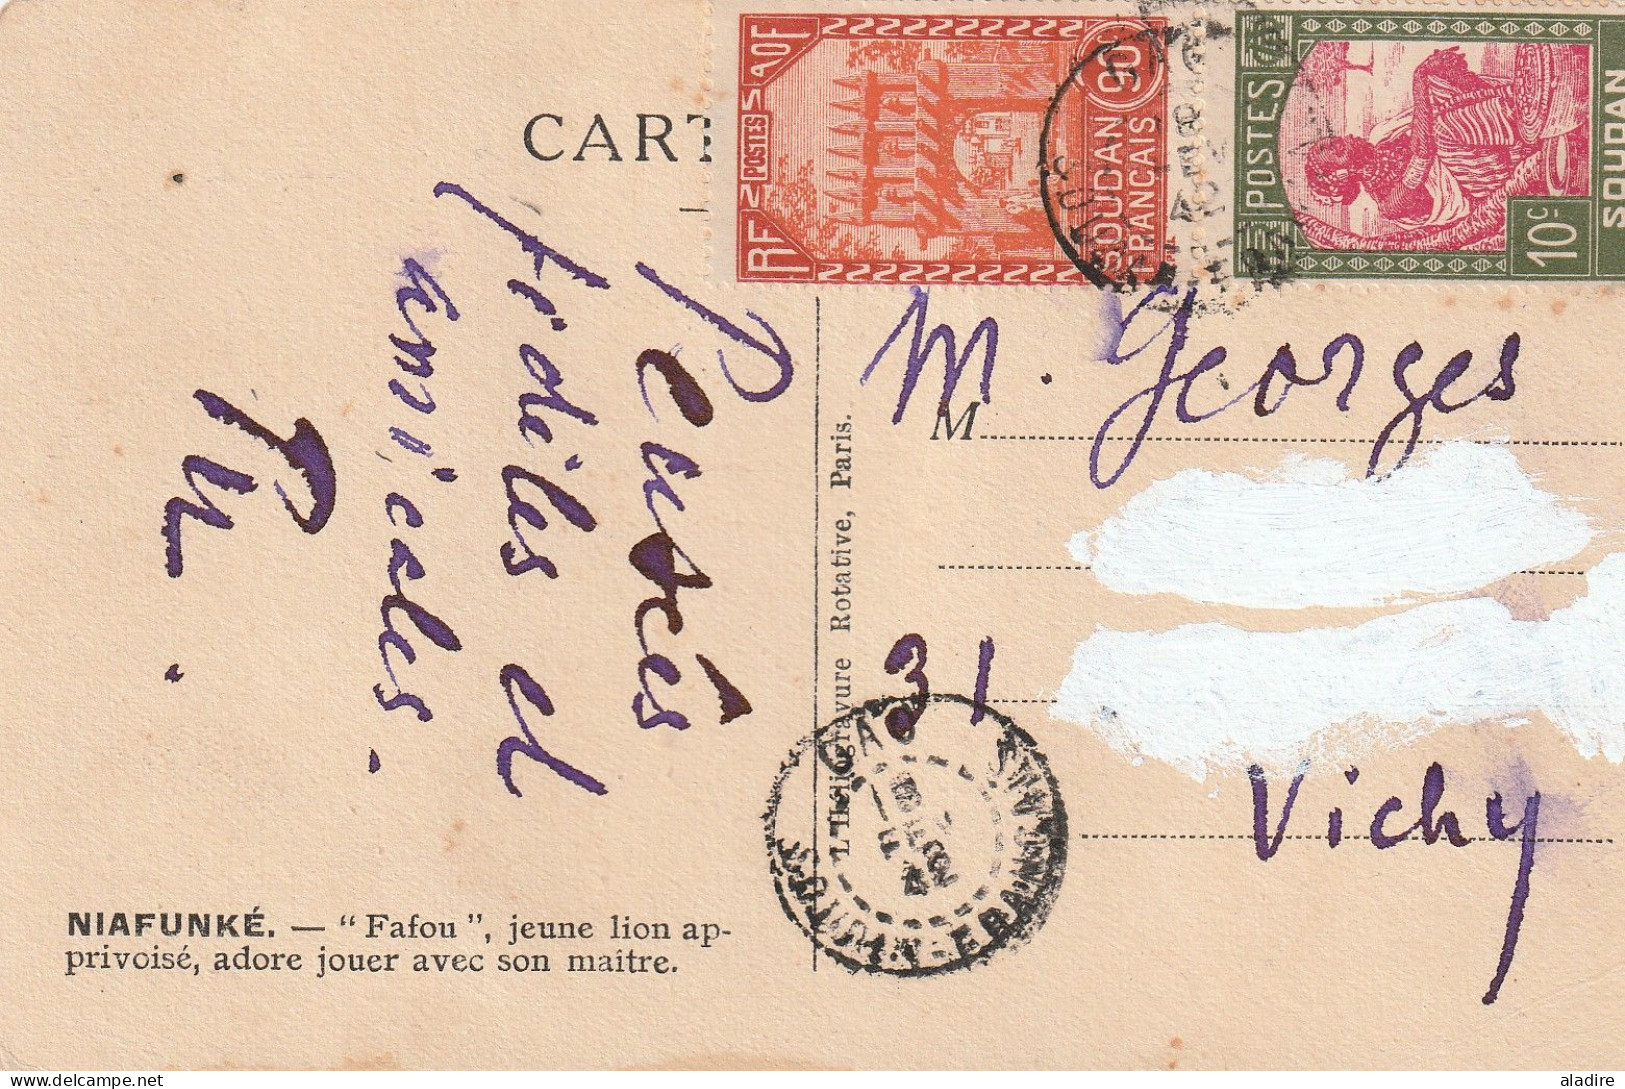 1933/1942 - SOUDAN MALI  - Lot De 2 Enveloppes (1 Voyage étude Air France) Et 1 Carte Postale / Gao, Nioro Et Bamako - Briefe U. Dokumente